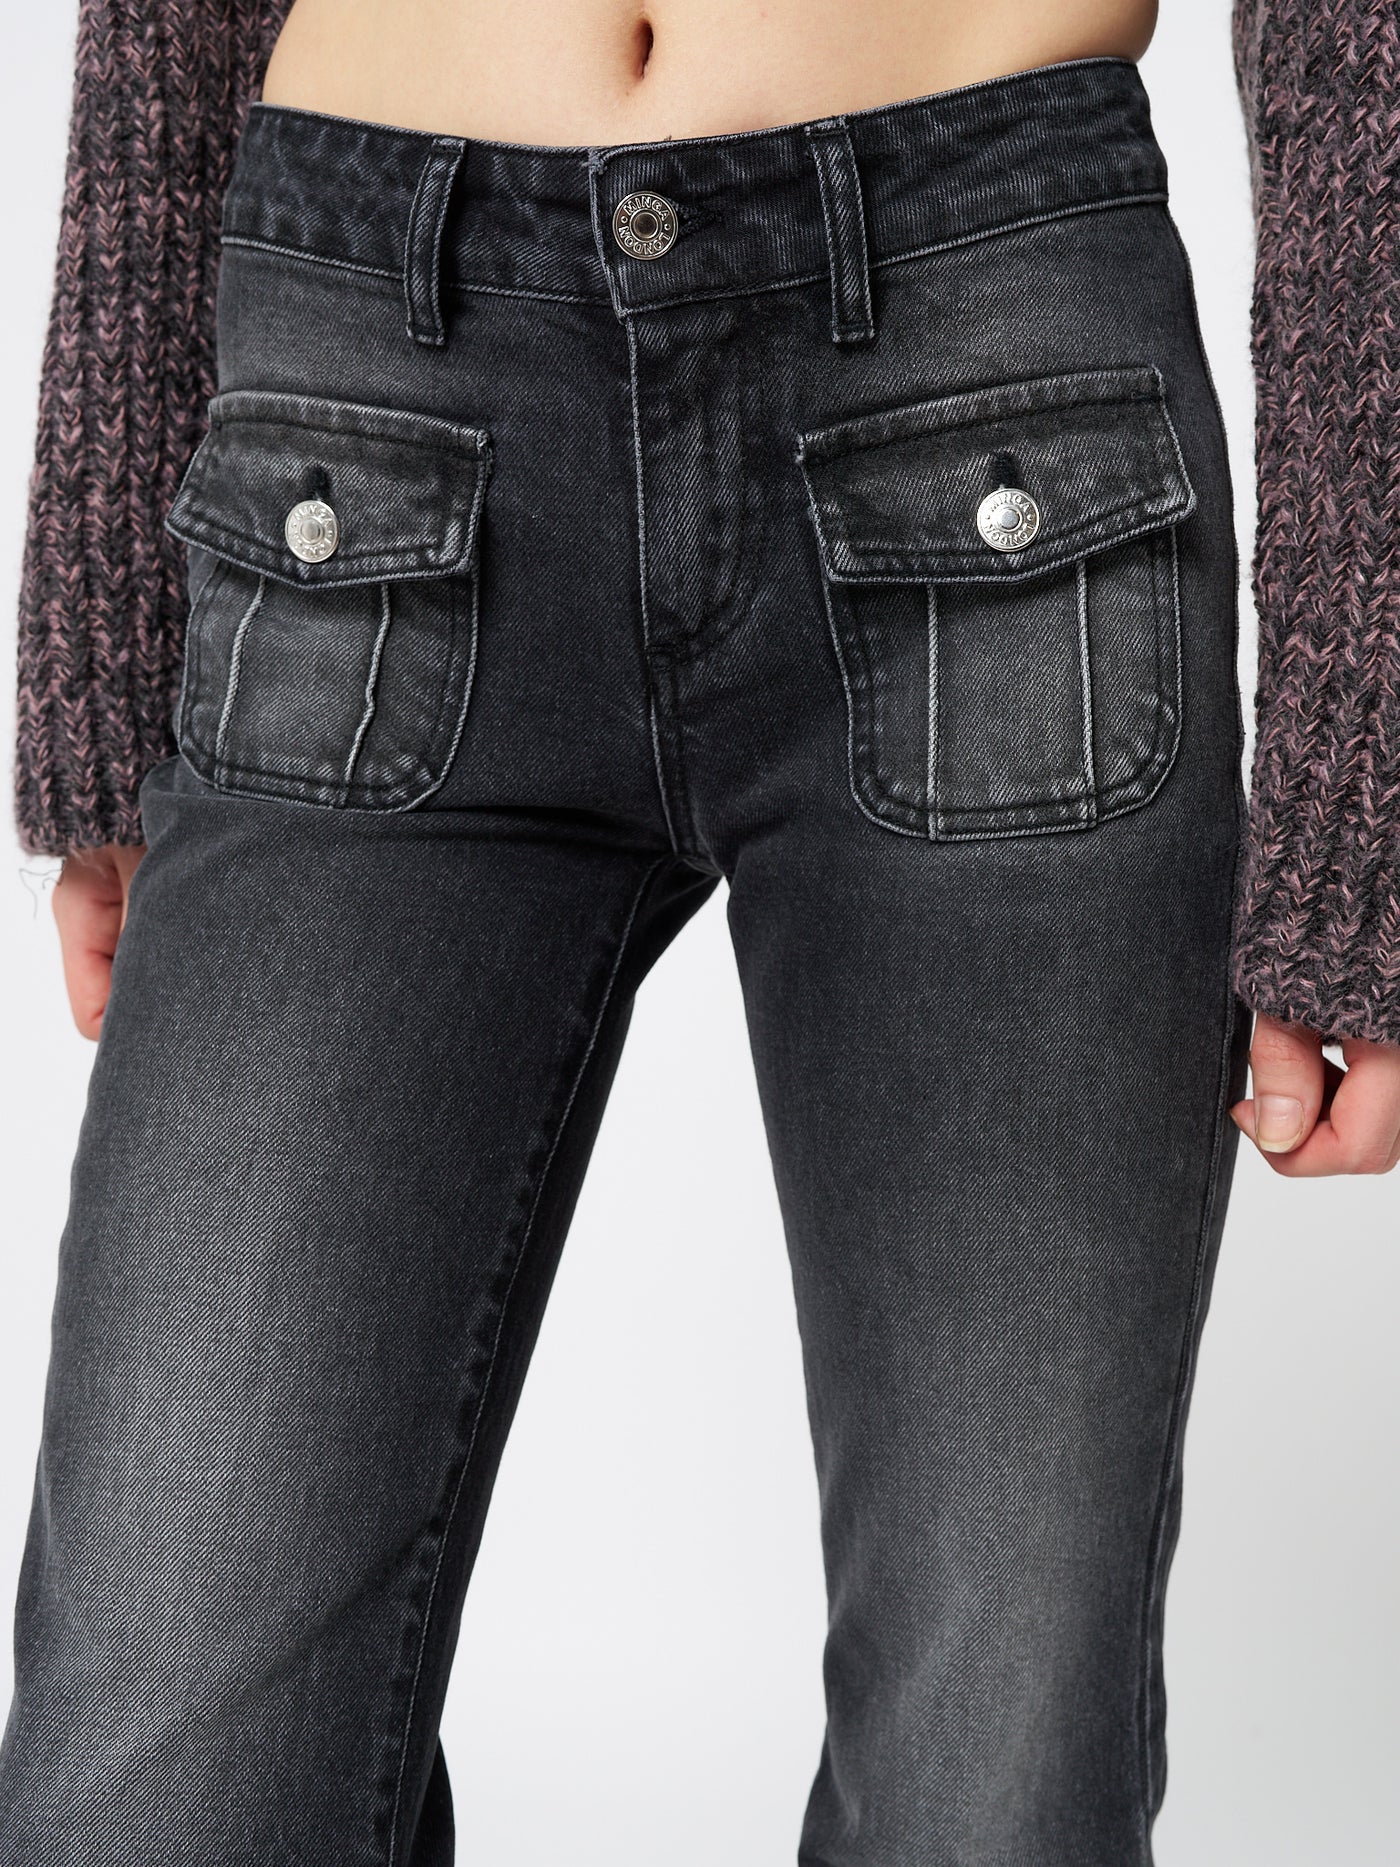 Jade Black Front Pocket Flare Jeans - Minga London